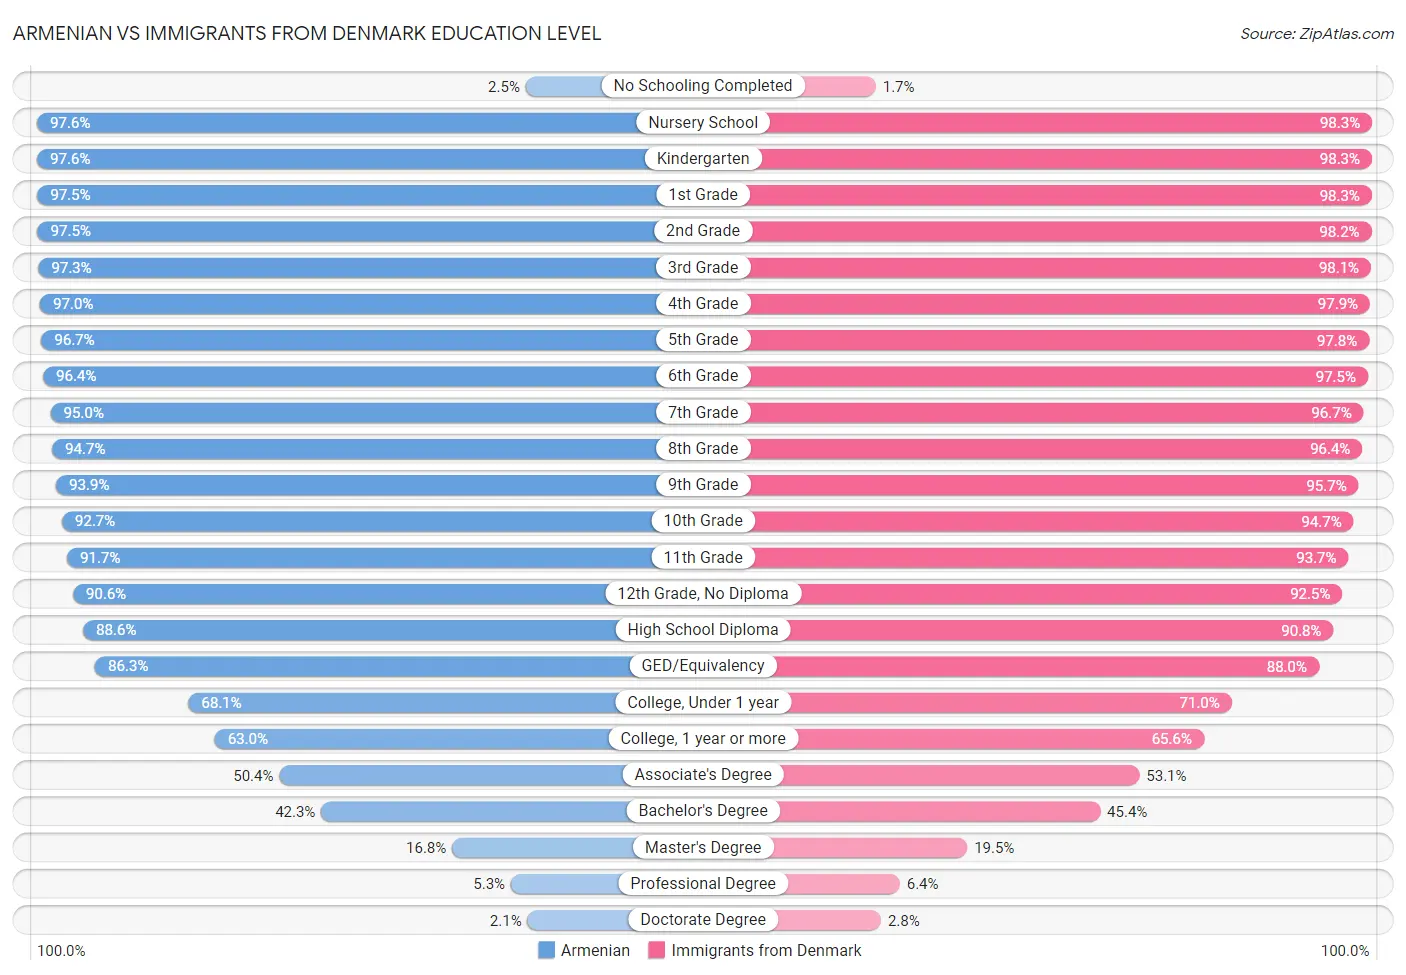 Armenian vs Immigrants from Denmark Education Level